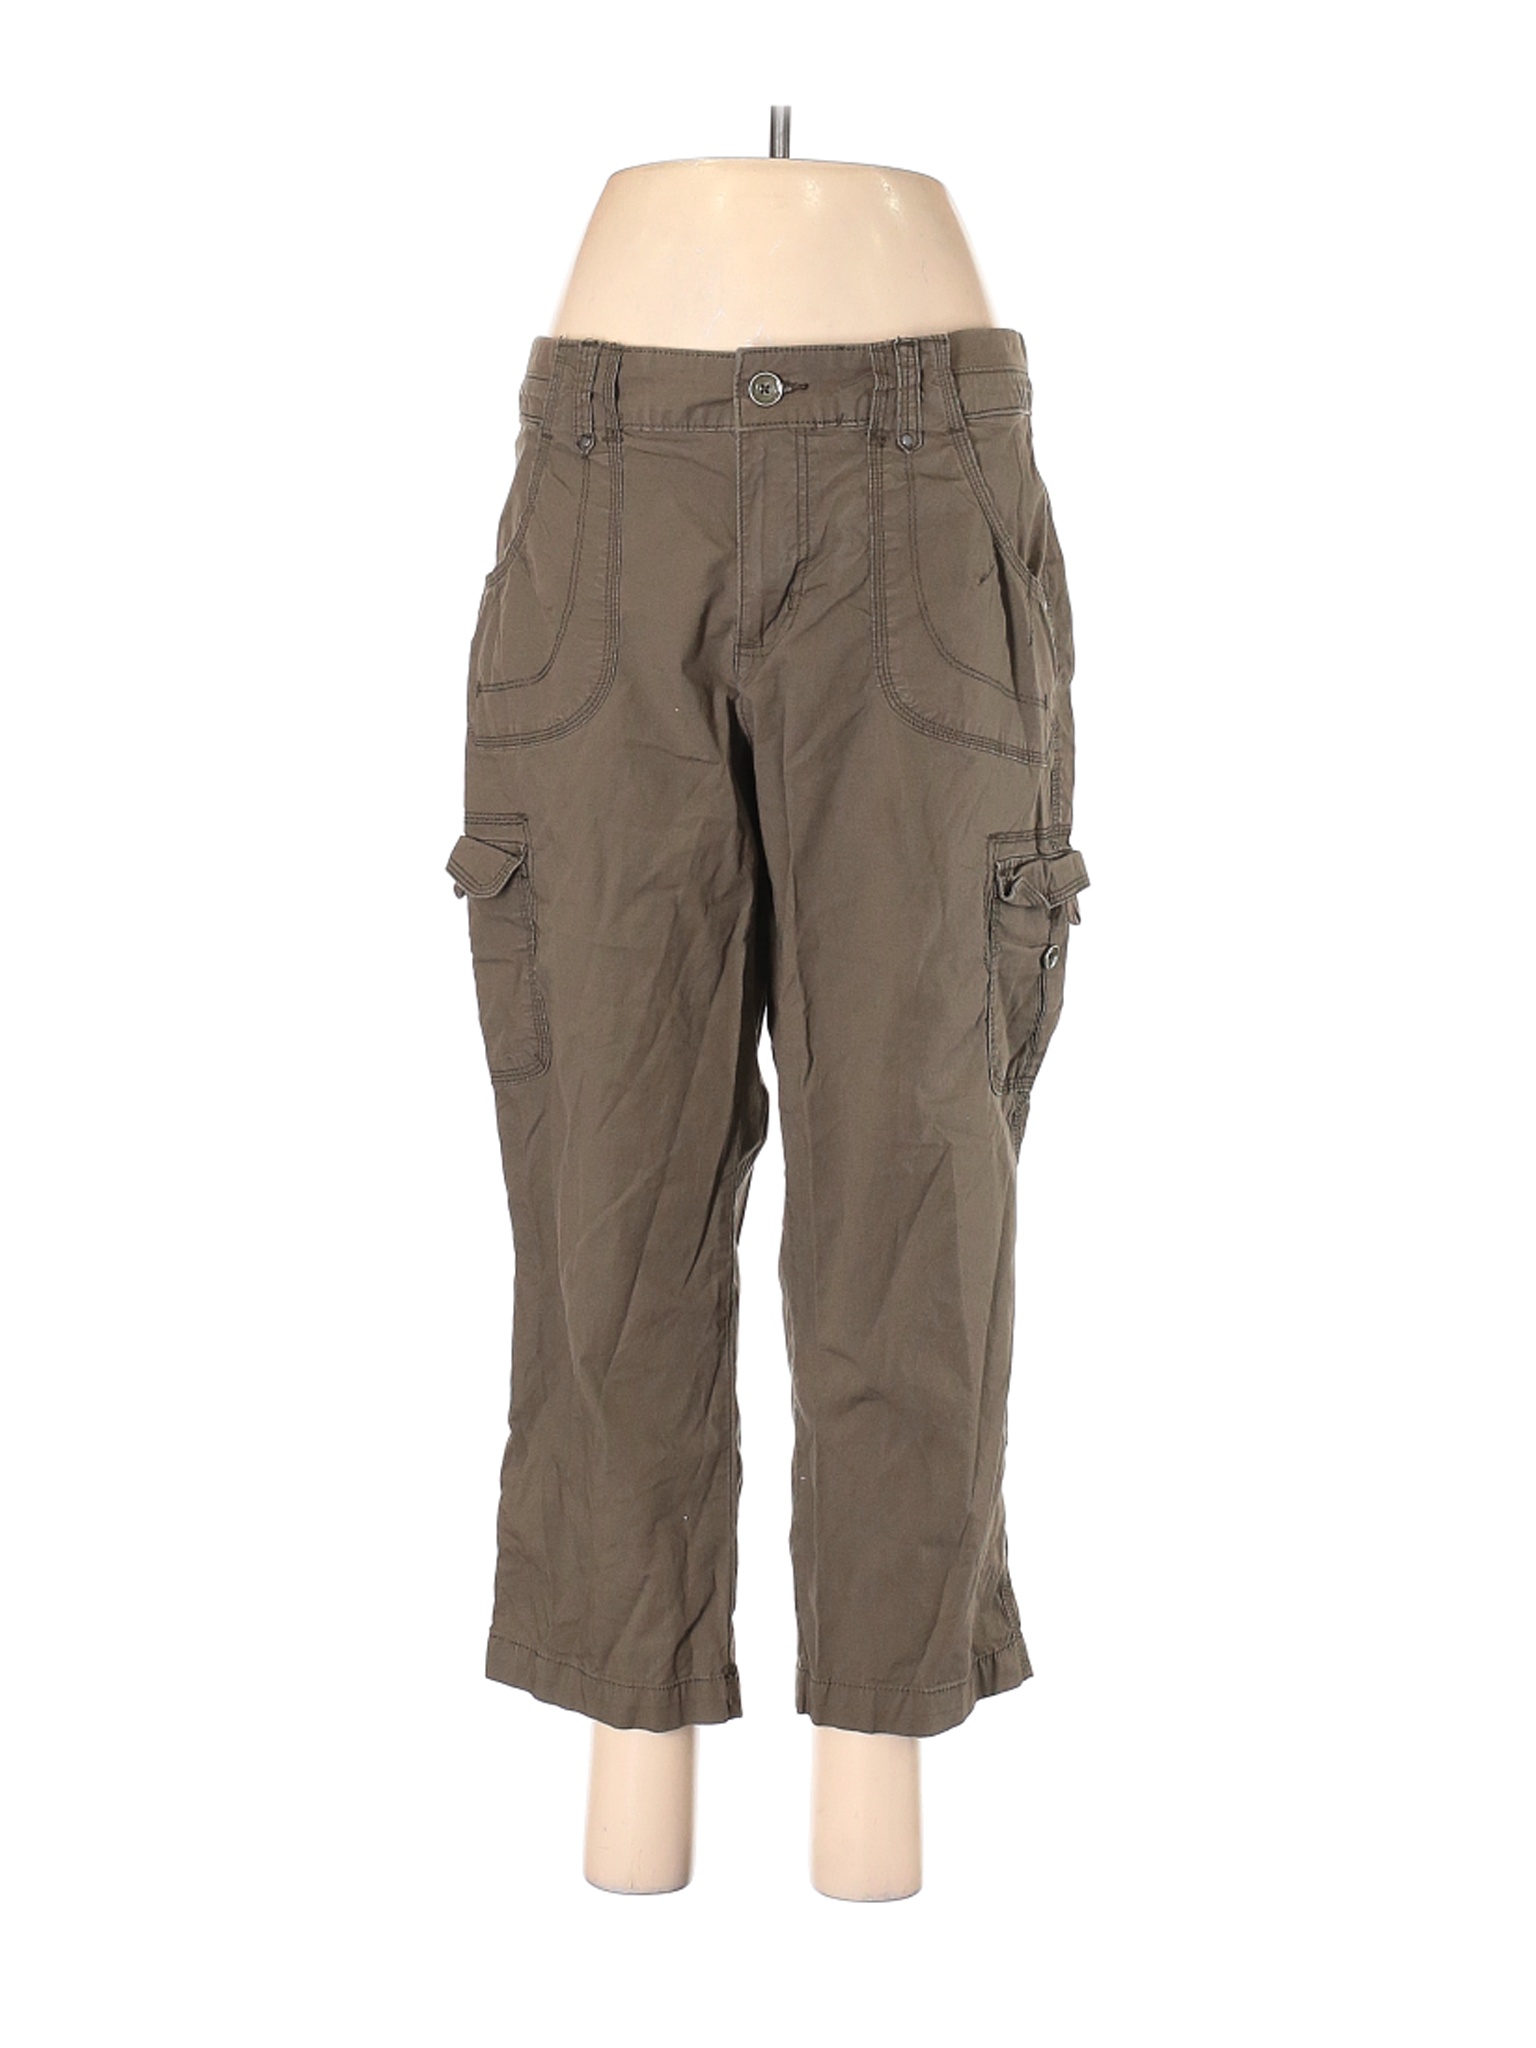 Lee Women Brown Cargo Pants M | eBay